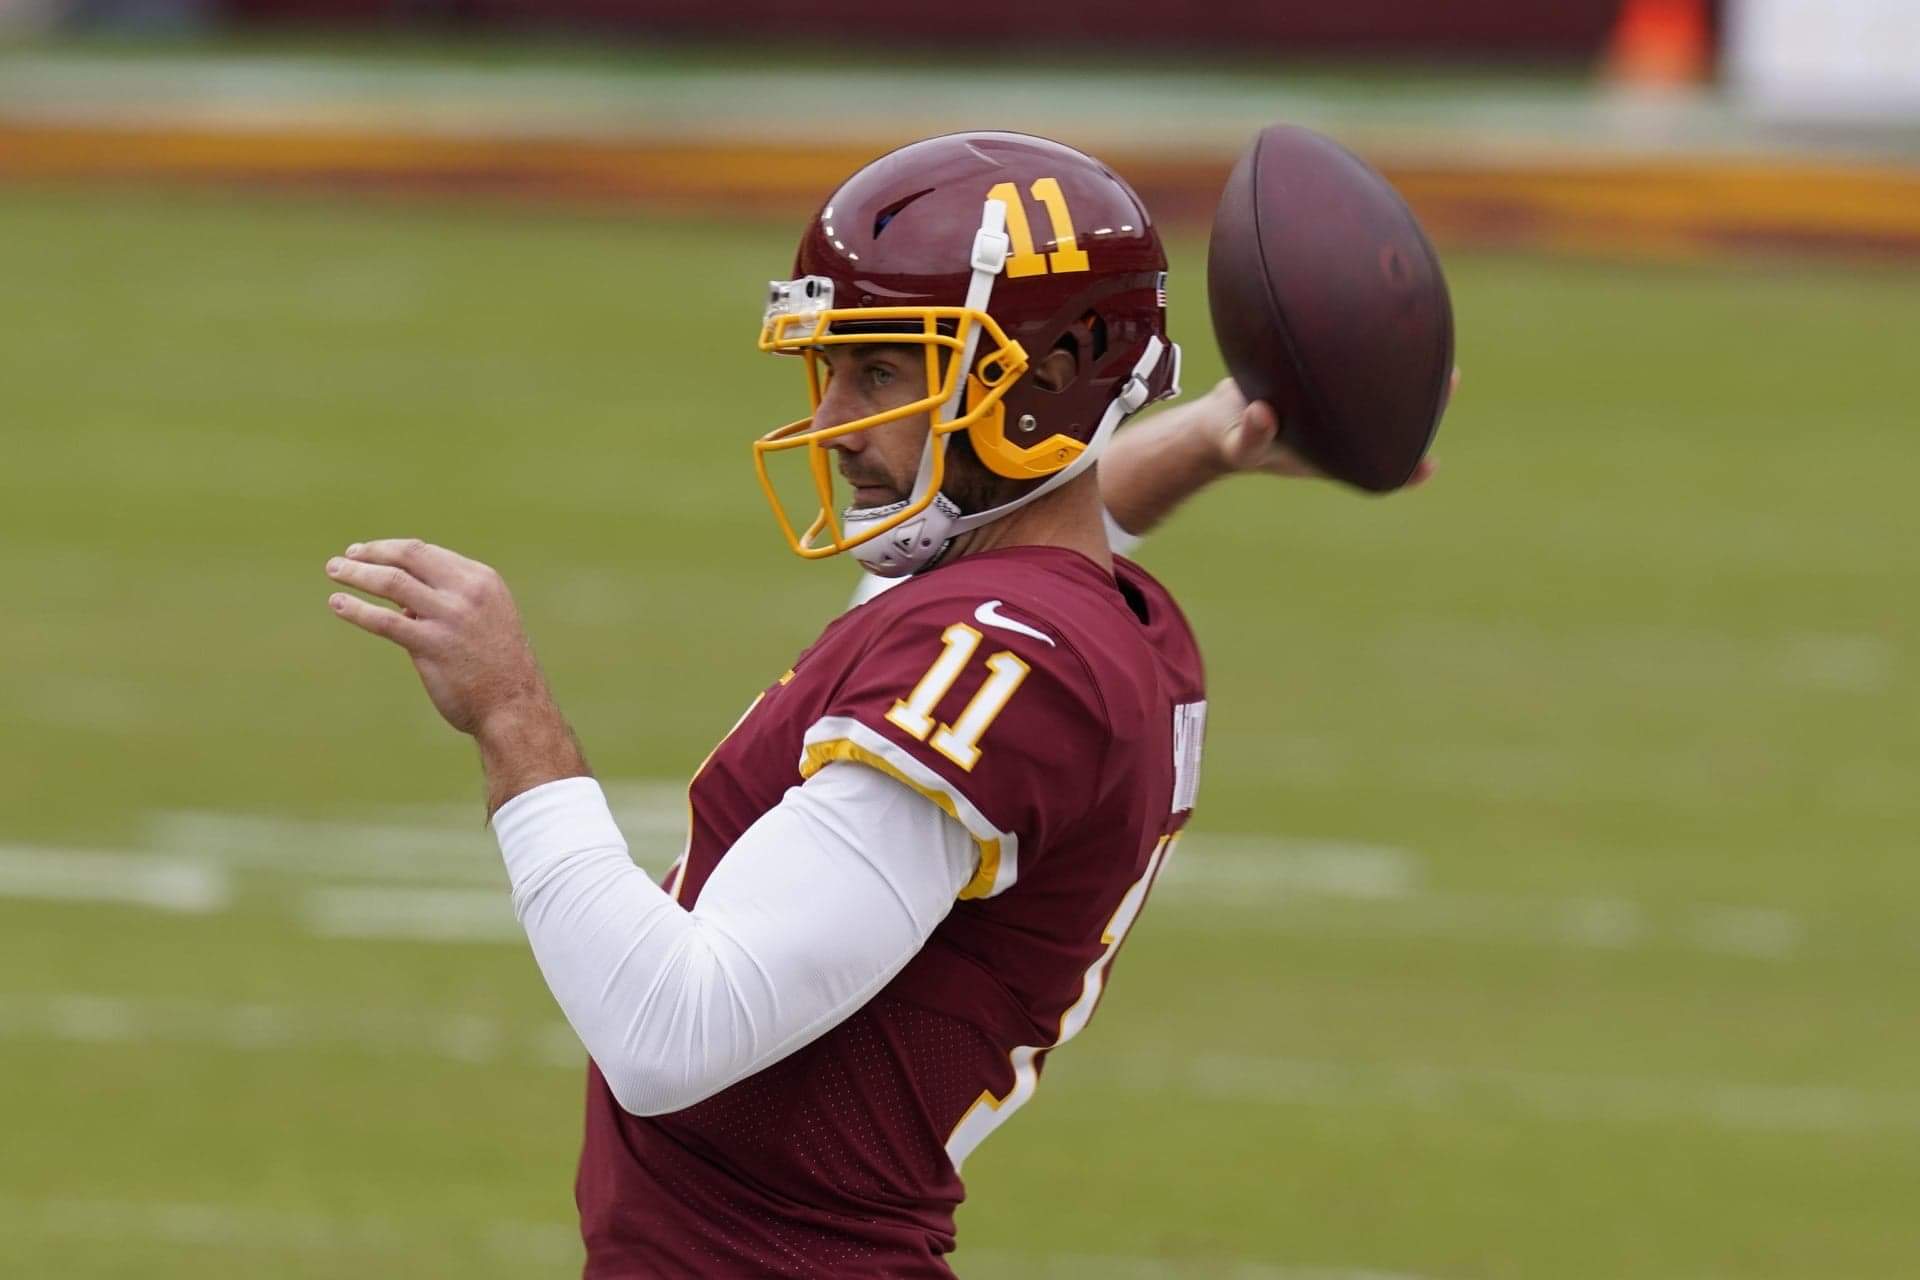 Washington quarterback Alex Smith/ via Steve Helber/Associated Press